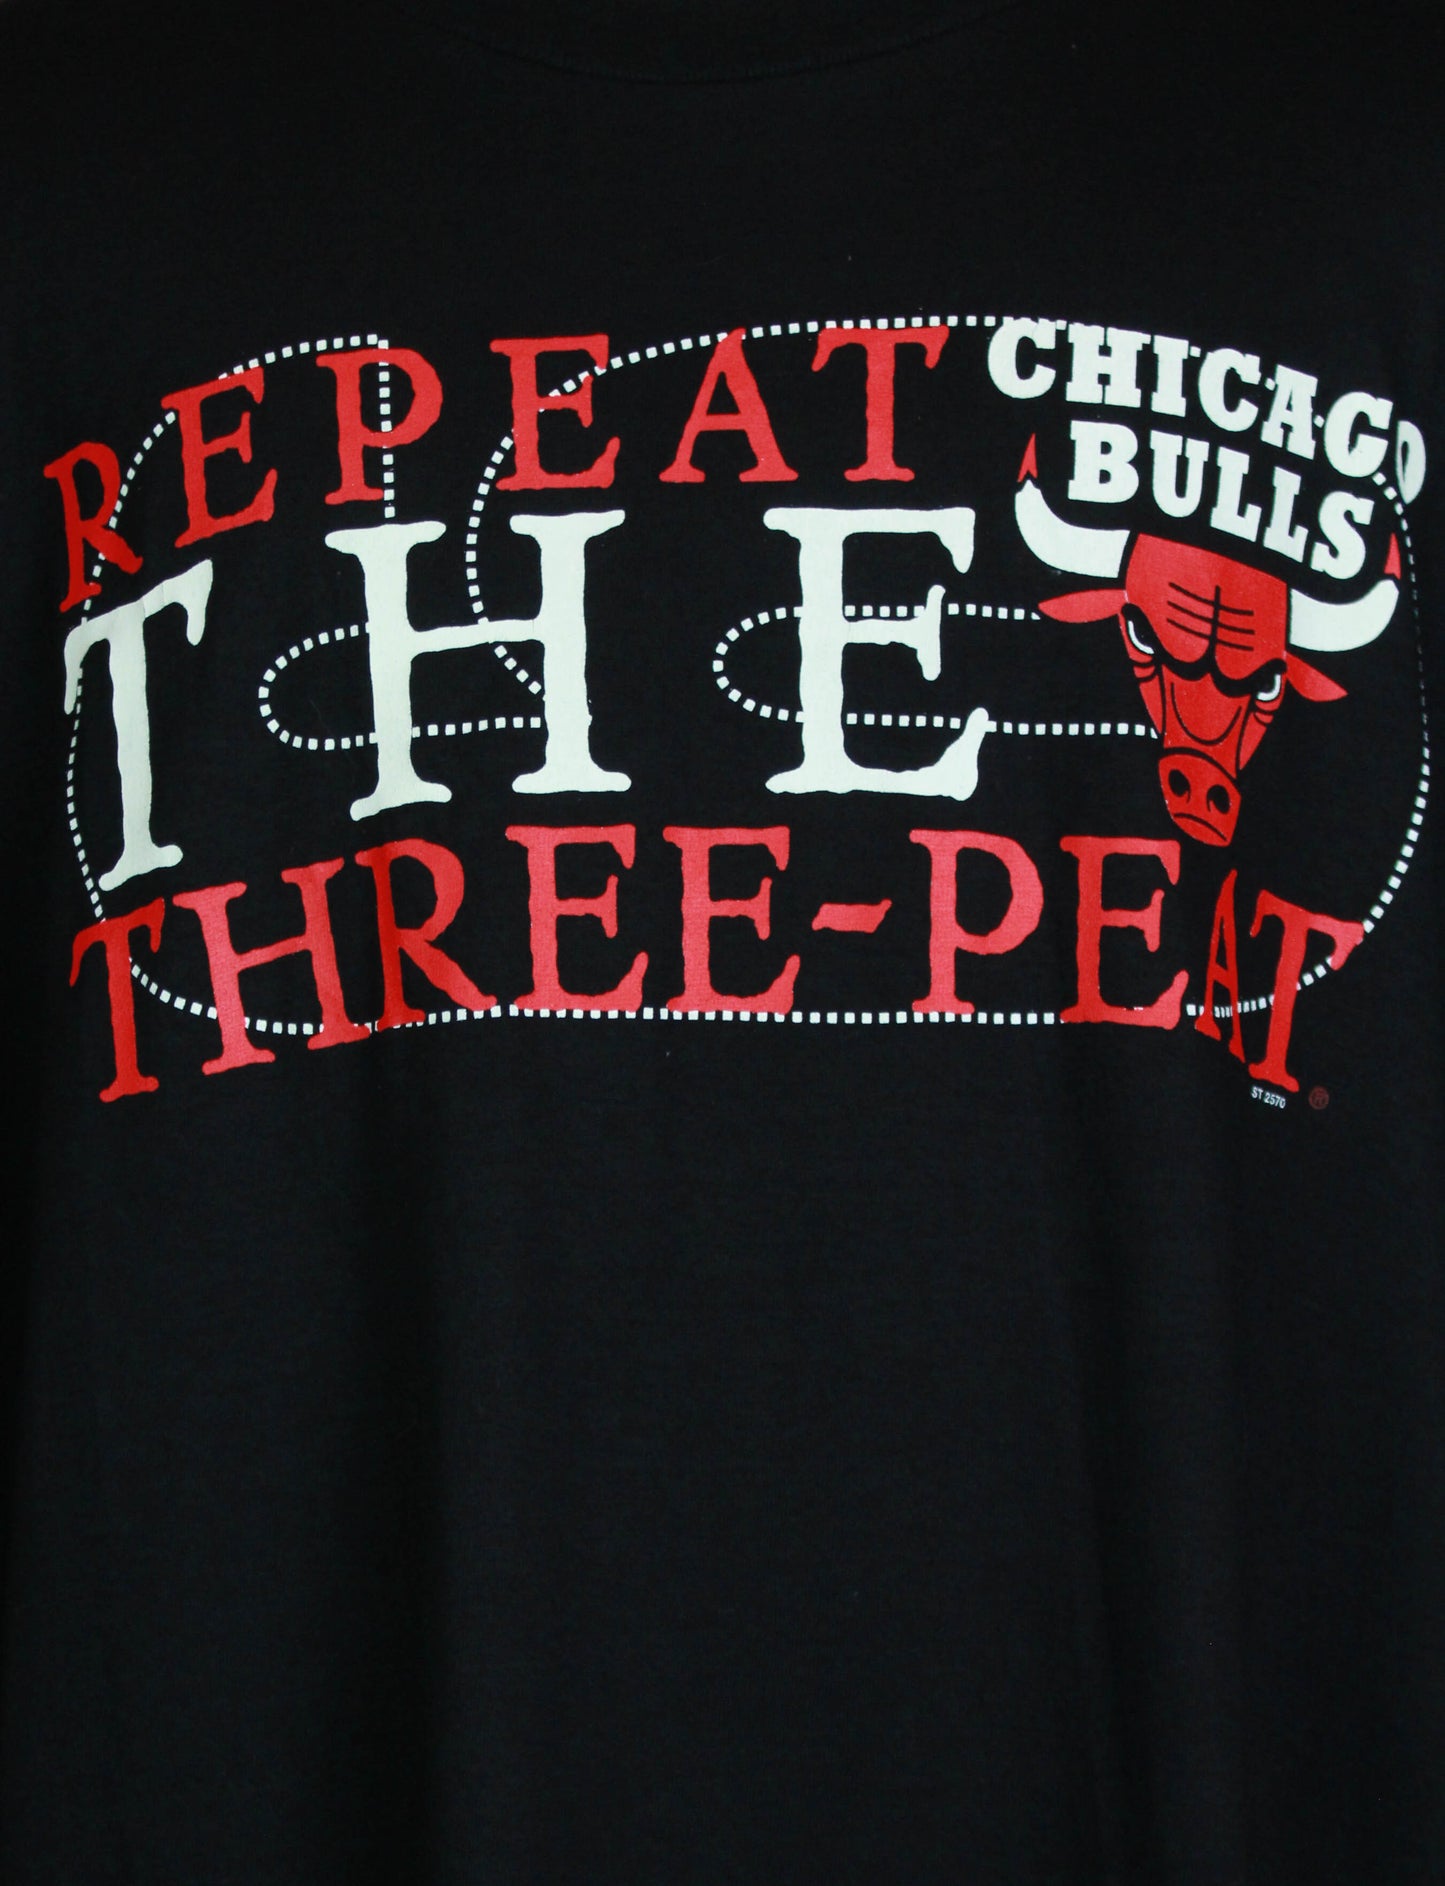 Vintage 1998 Chicago Bulls Graphic T Shirt NBA Repeat The Three-Peat Deadstock Black Unisex XL/XXL